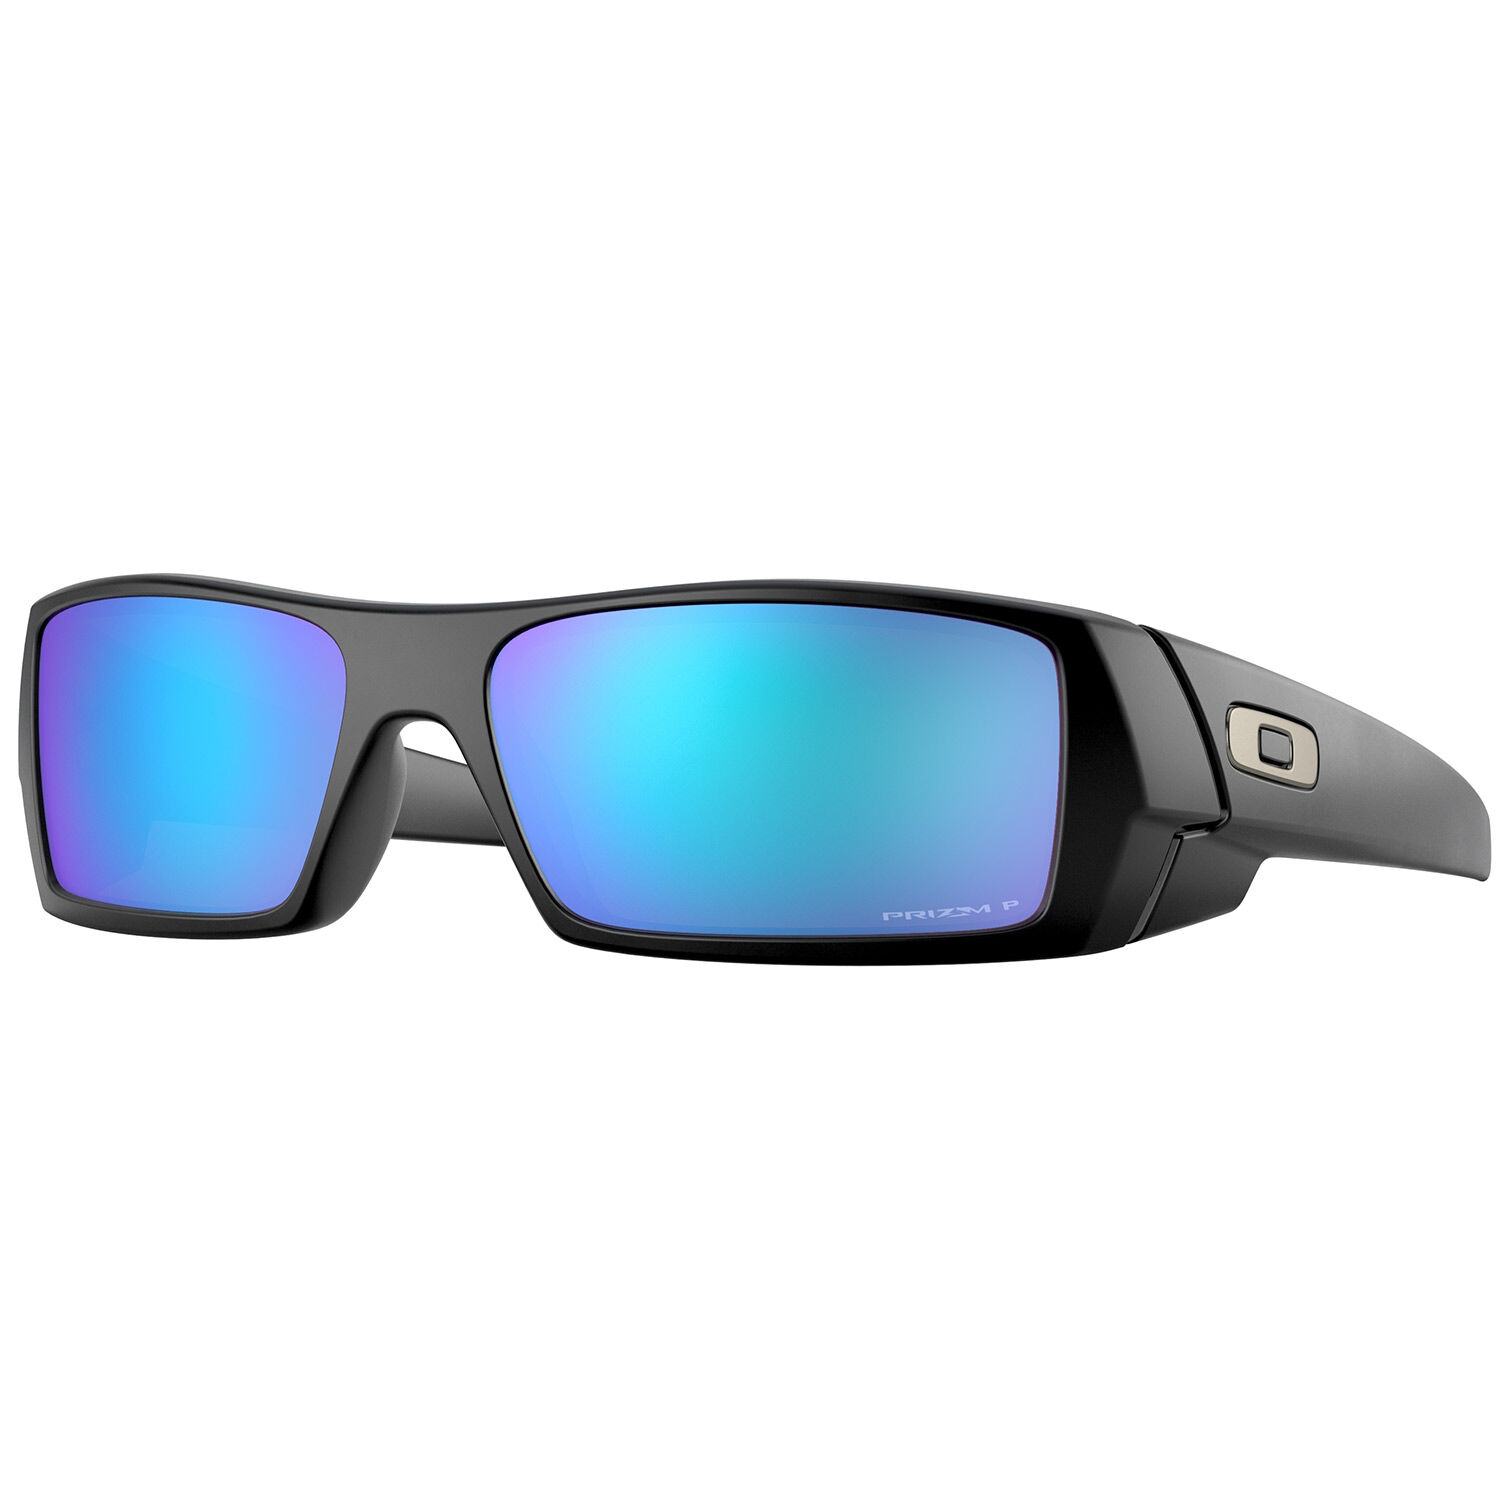 Walleva Purple Polarized Replacement Lenses For Oakley Gascan Sunglasses -  Walmart.com